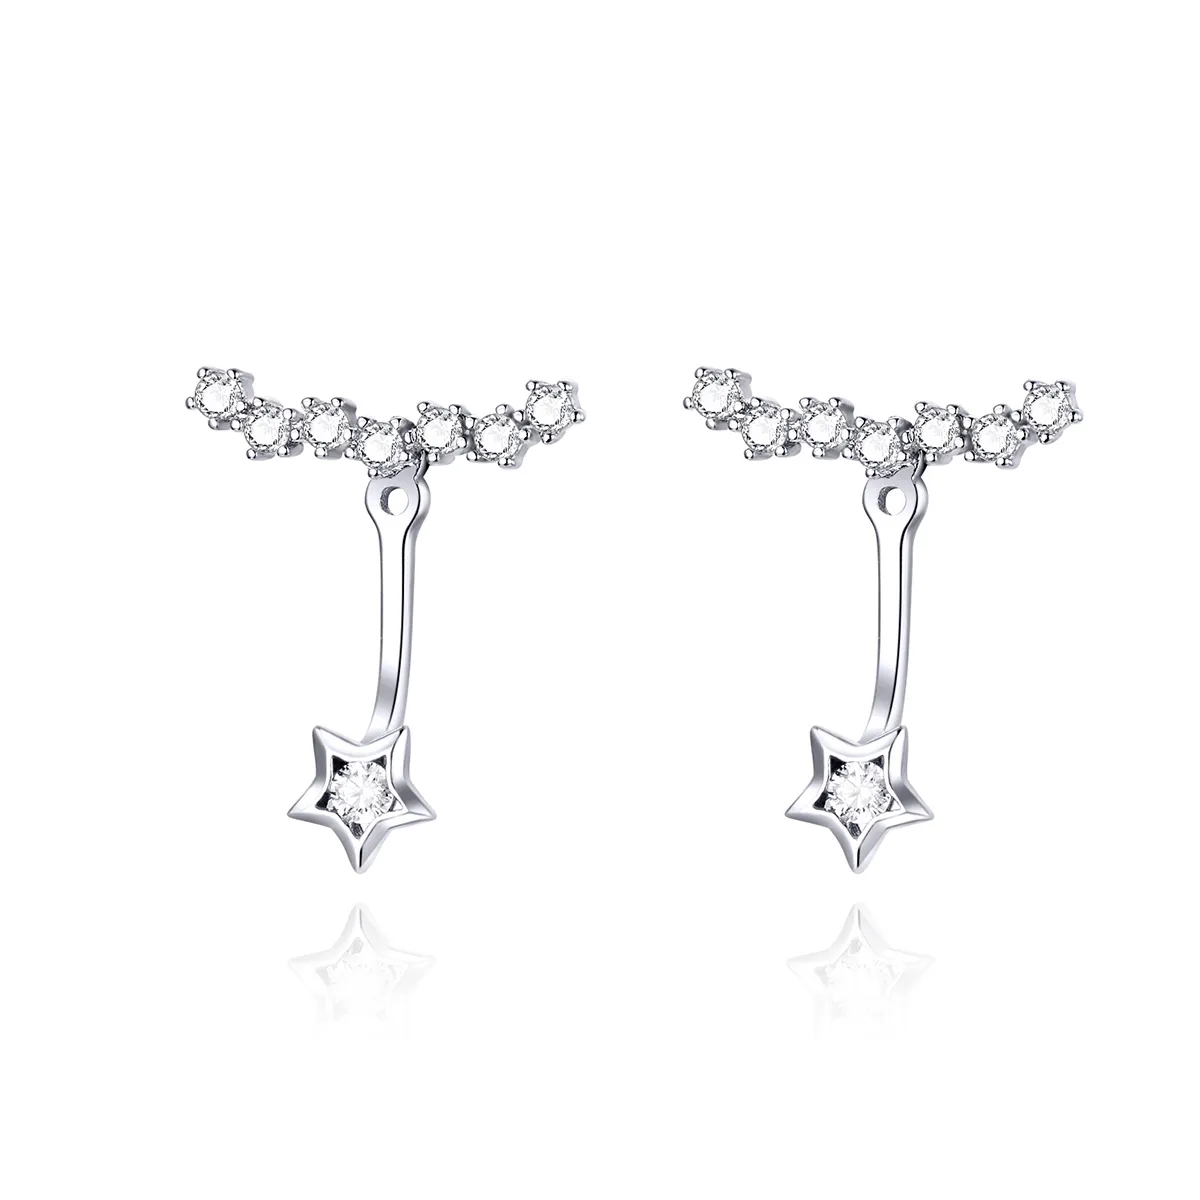 Pandora Style Silver Reminiscences Dangle Earrings - BSE175